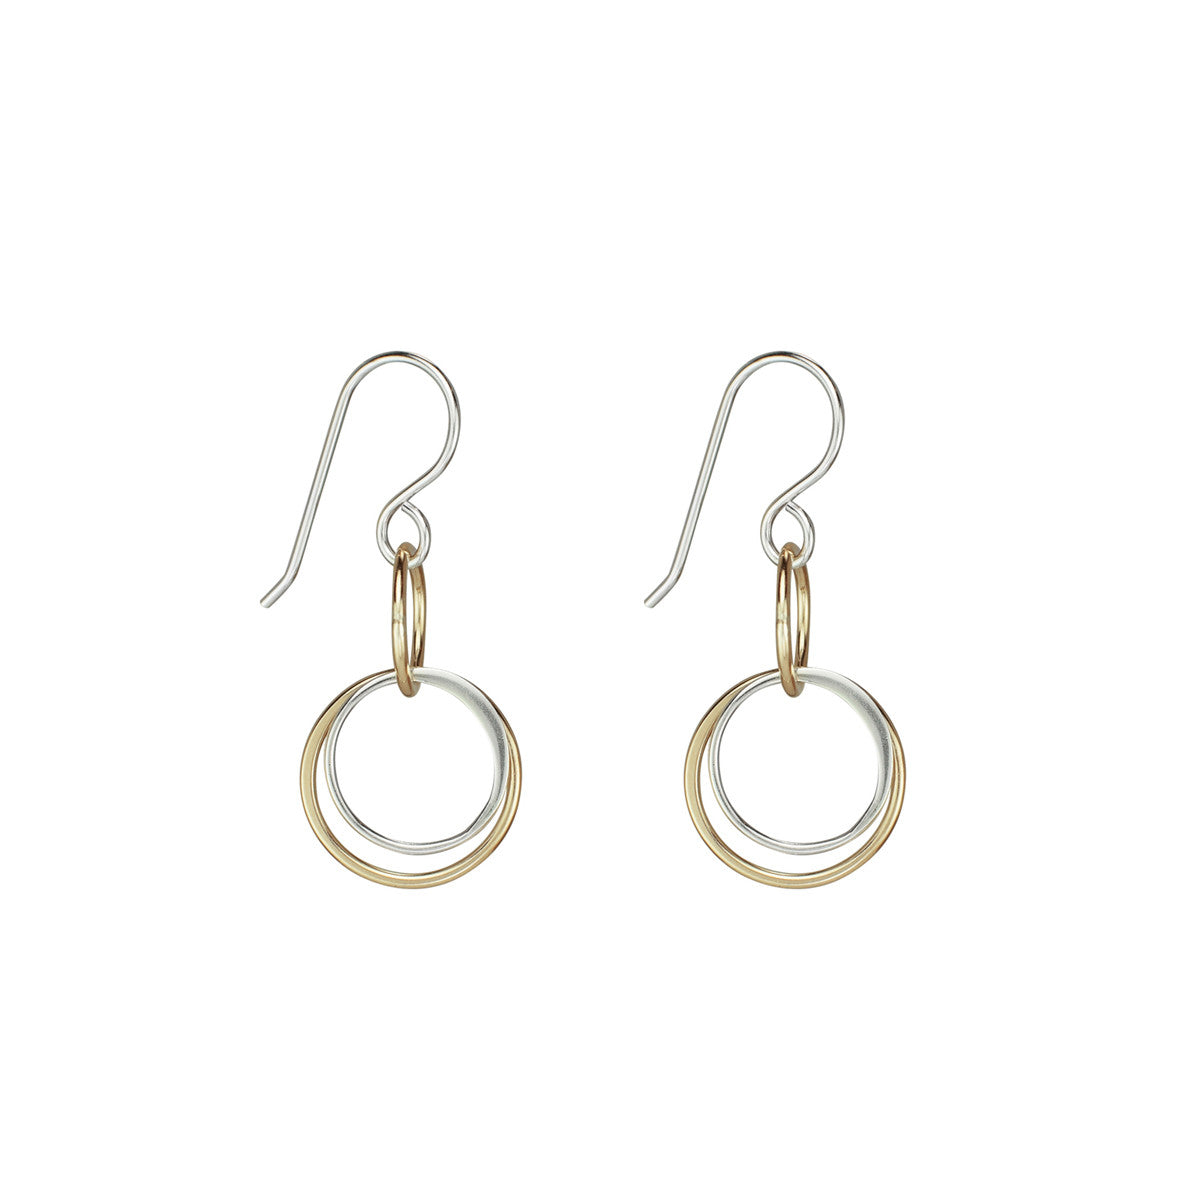 Black Silver Dangle & Drop Earrings for Women at Rs 499/piece | डैंगलिंग  इयररिंग in Jaipur | ID: 21509219433